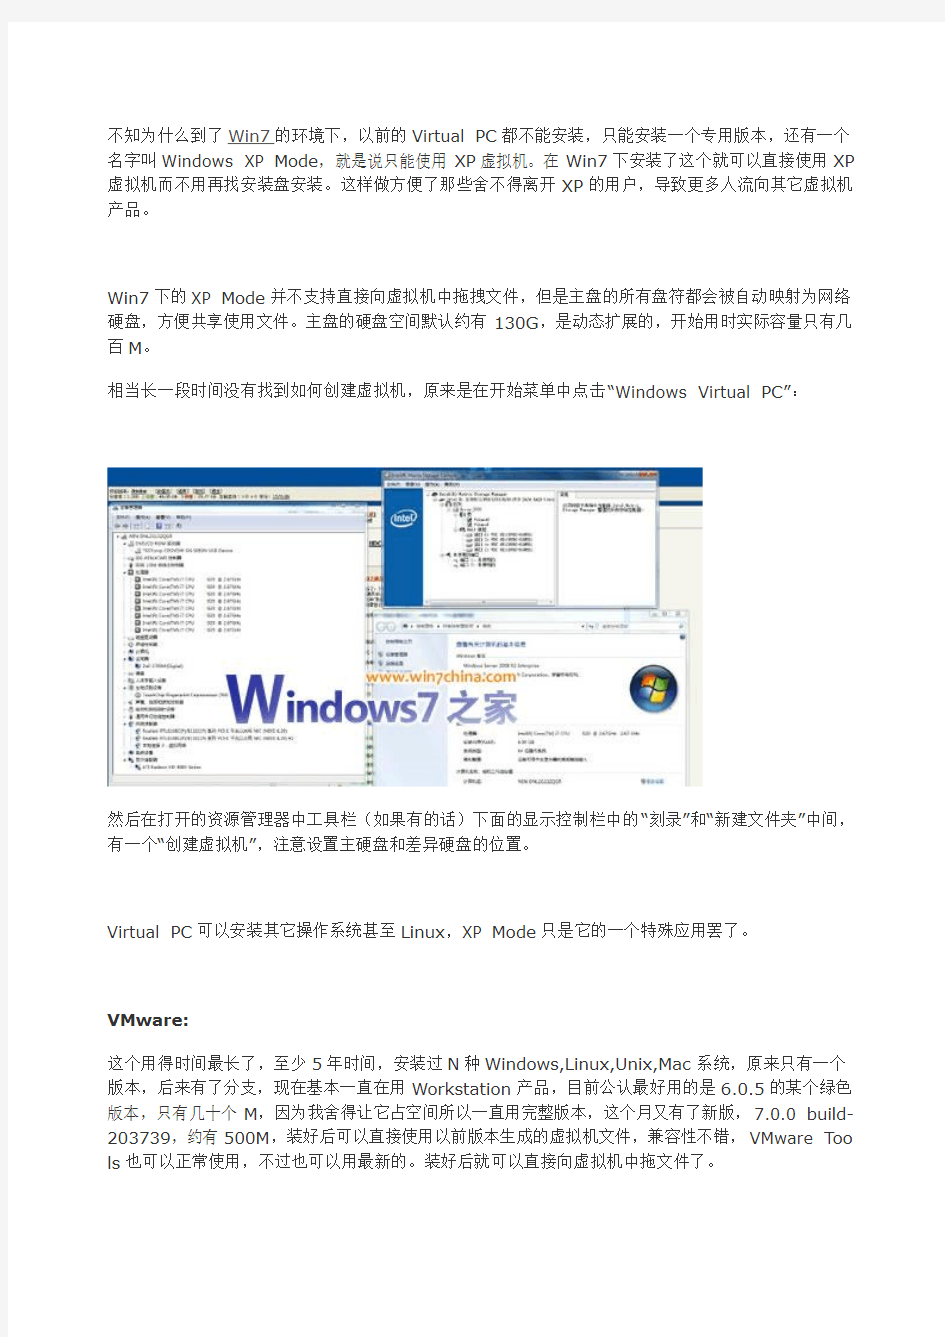 Win7下Virtual PC,VMware和VirtualBox 三款虚拟机软件使用比较